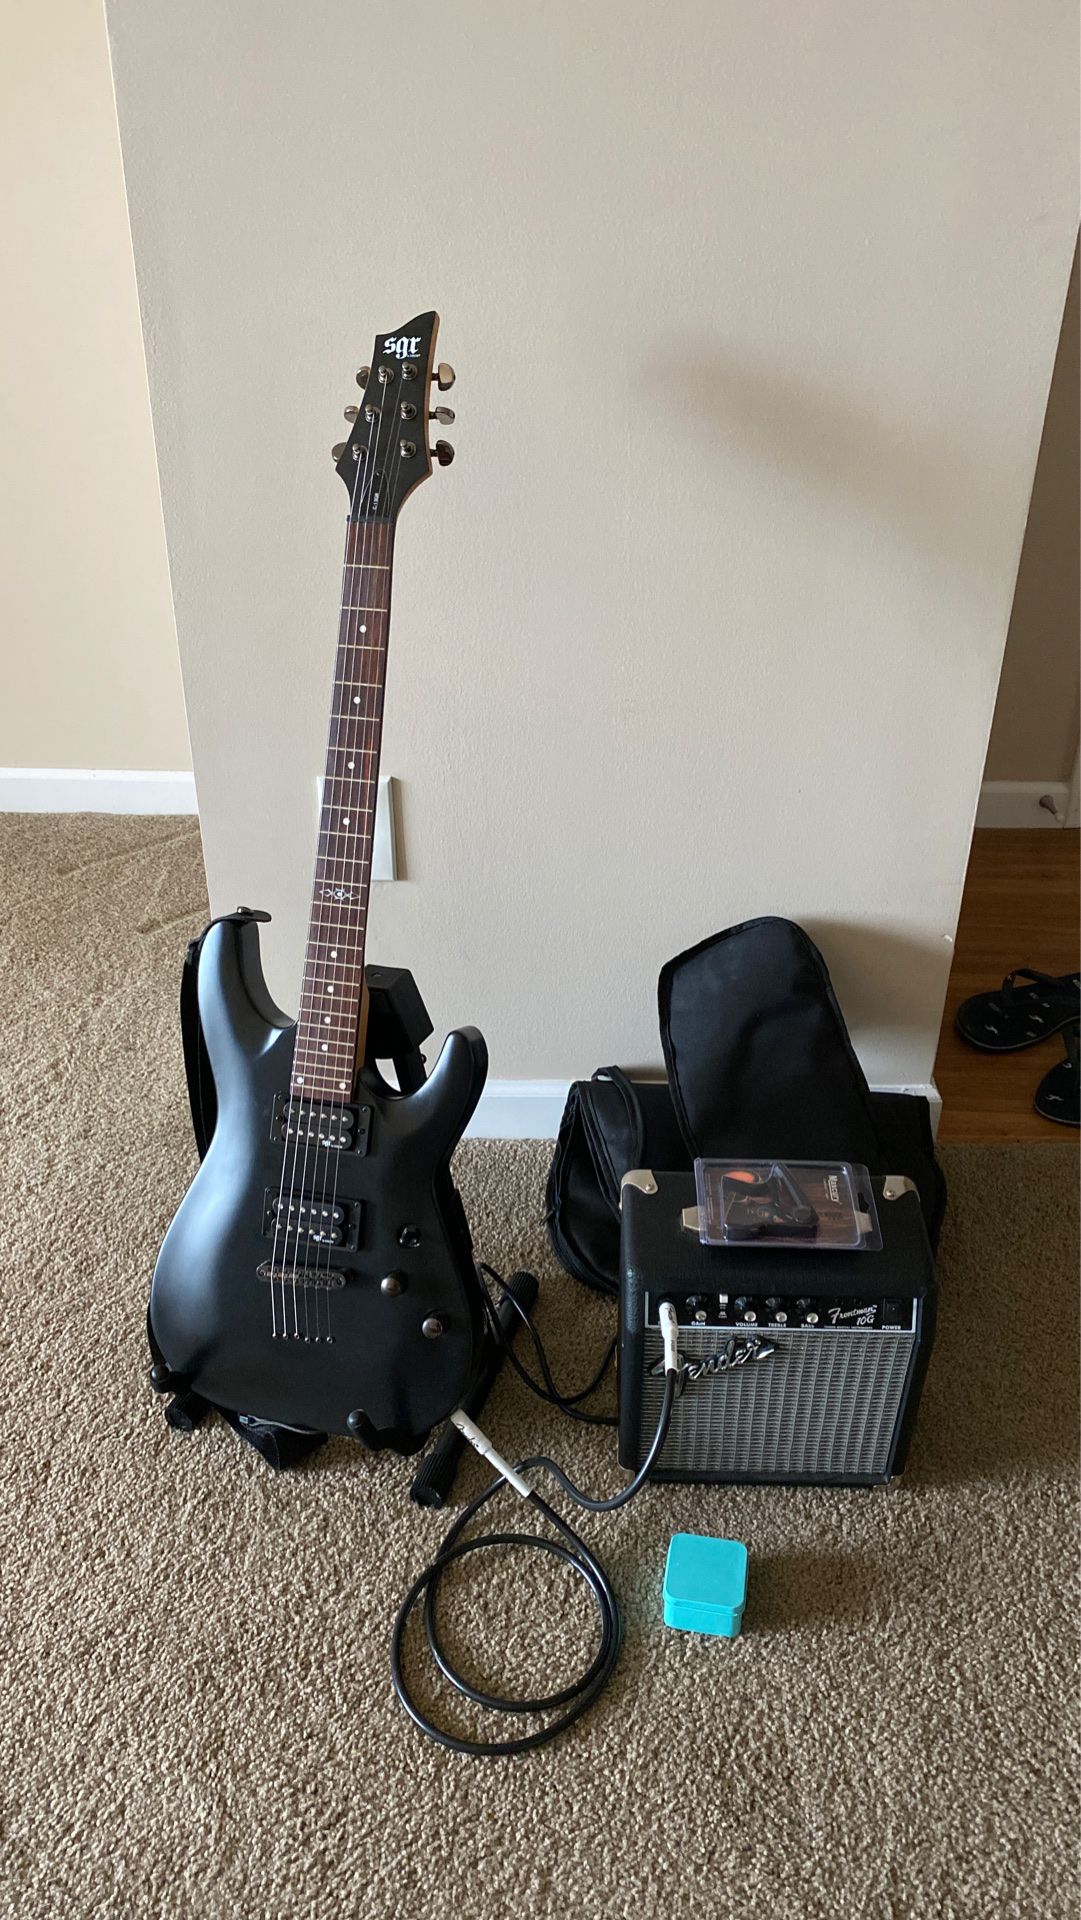 SGR Matte black electric Guitar with Fender 10 G amplifier